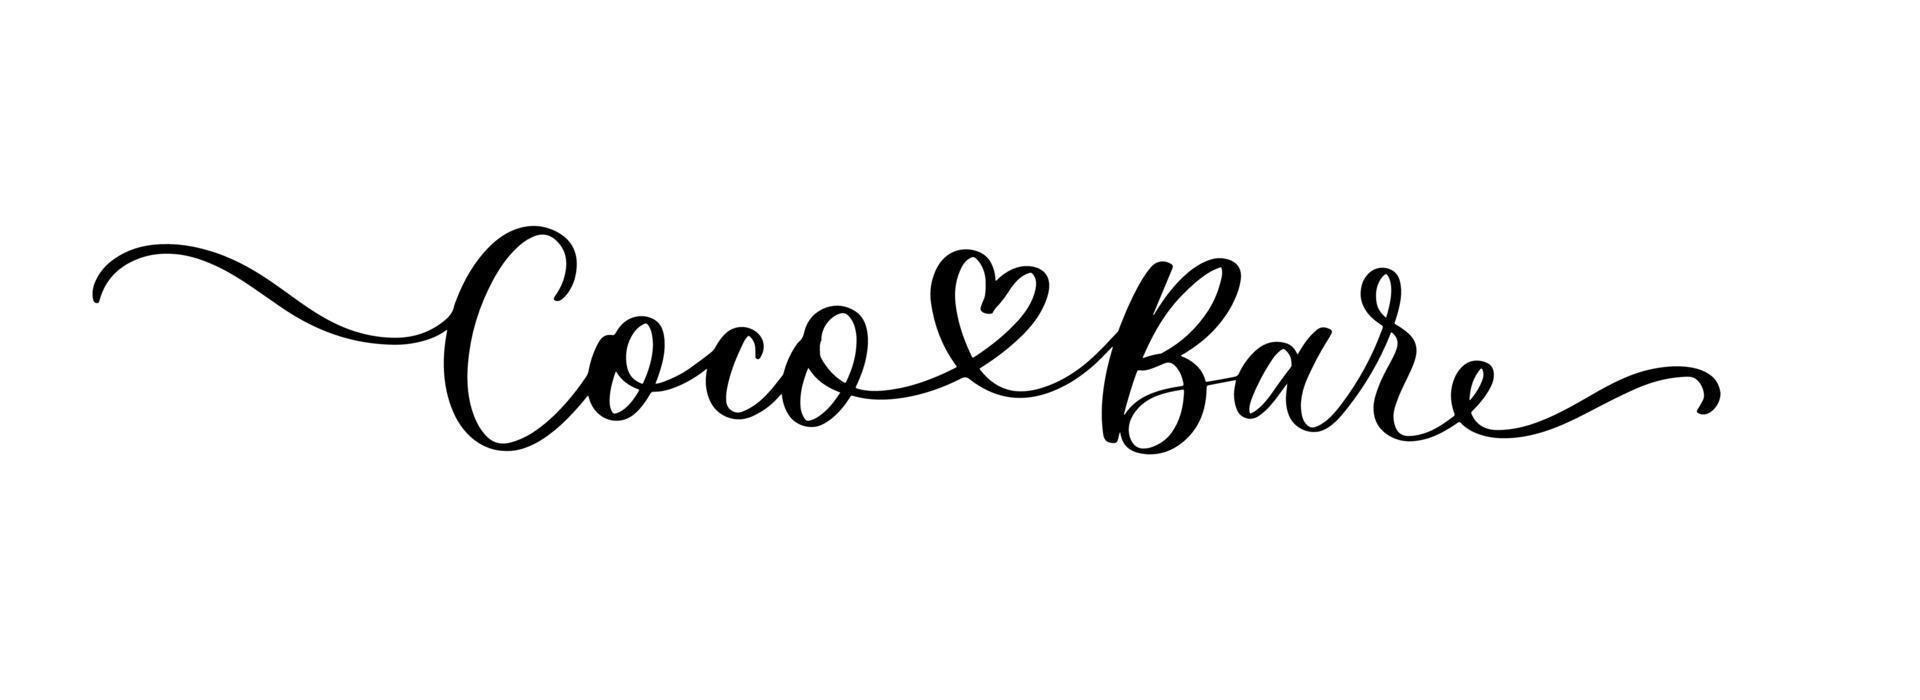 Coco bar lettering vector logo inscription for cafe.